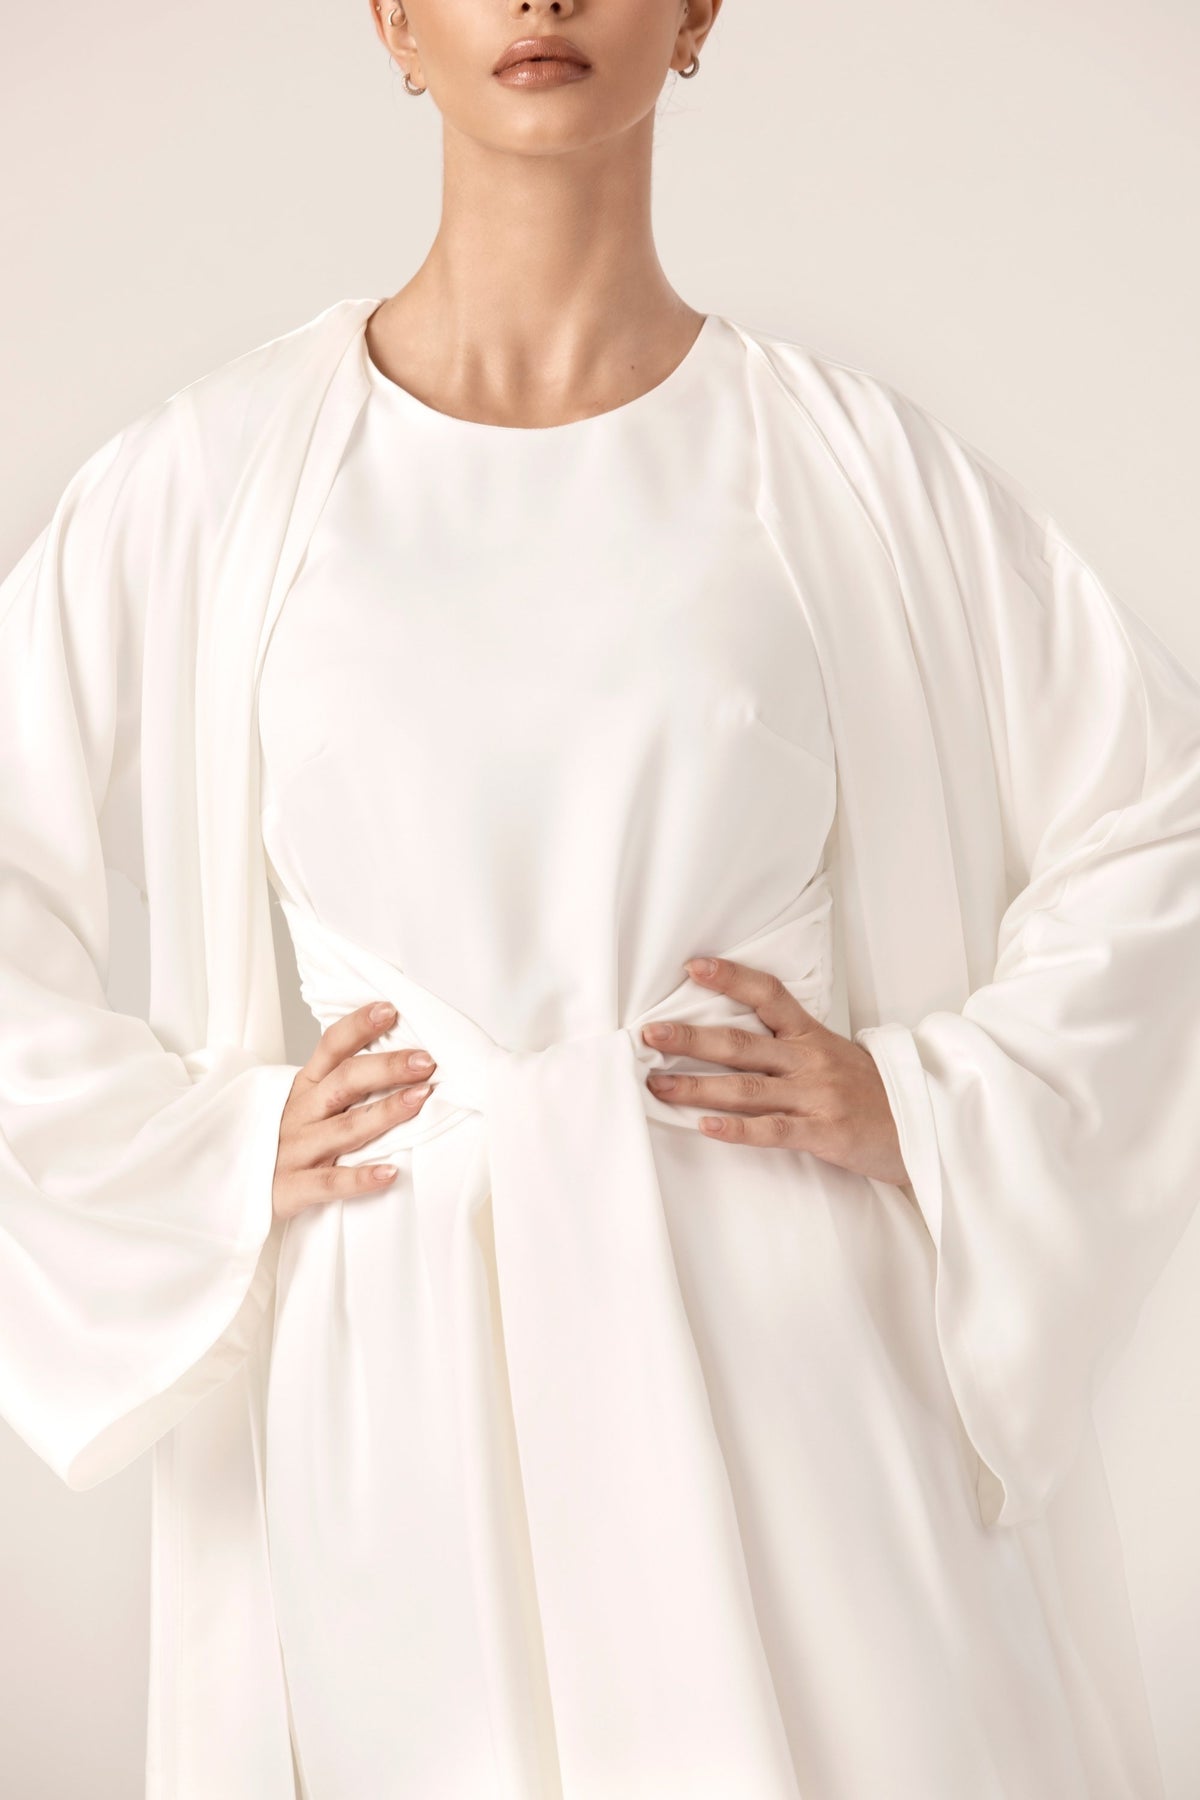 Leyana Matching Dress and Jacket Set - White epschoolboard 